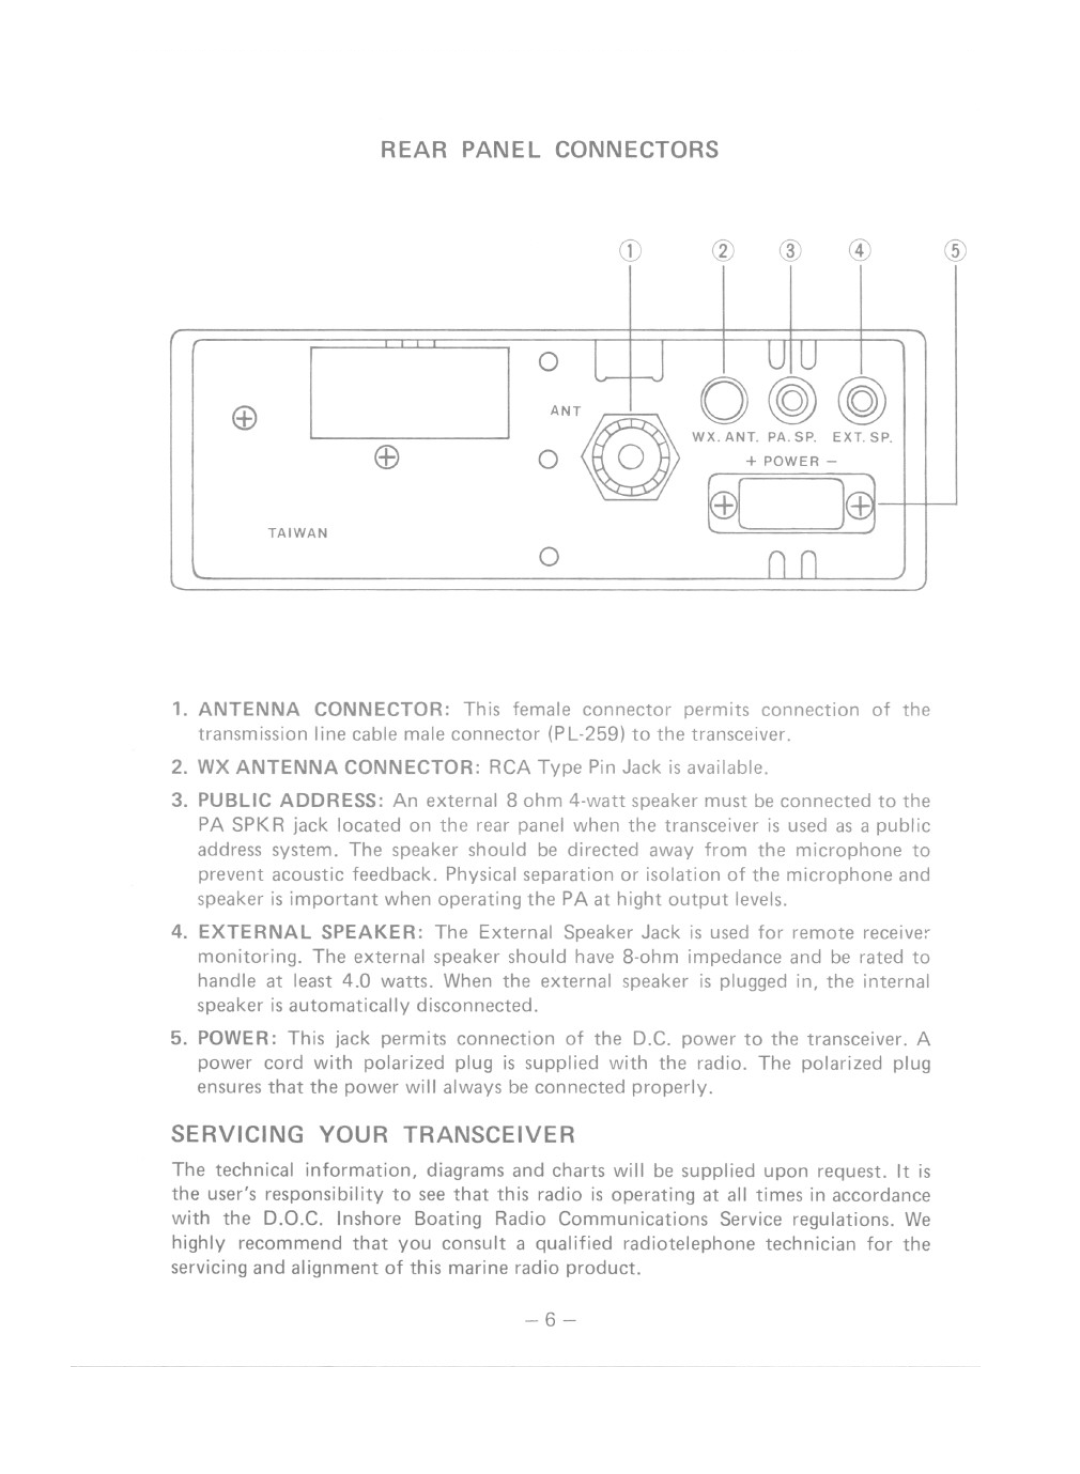 Uniden MC-4300 manual Rear Panel Connectors, Servicing Your Transceiver 